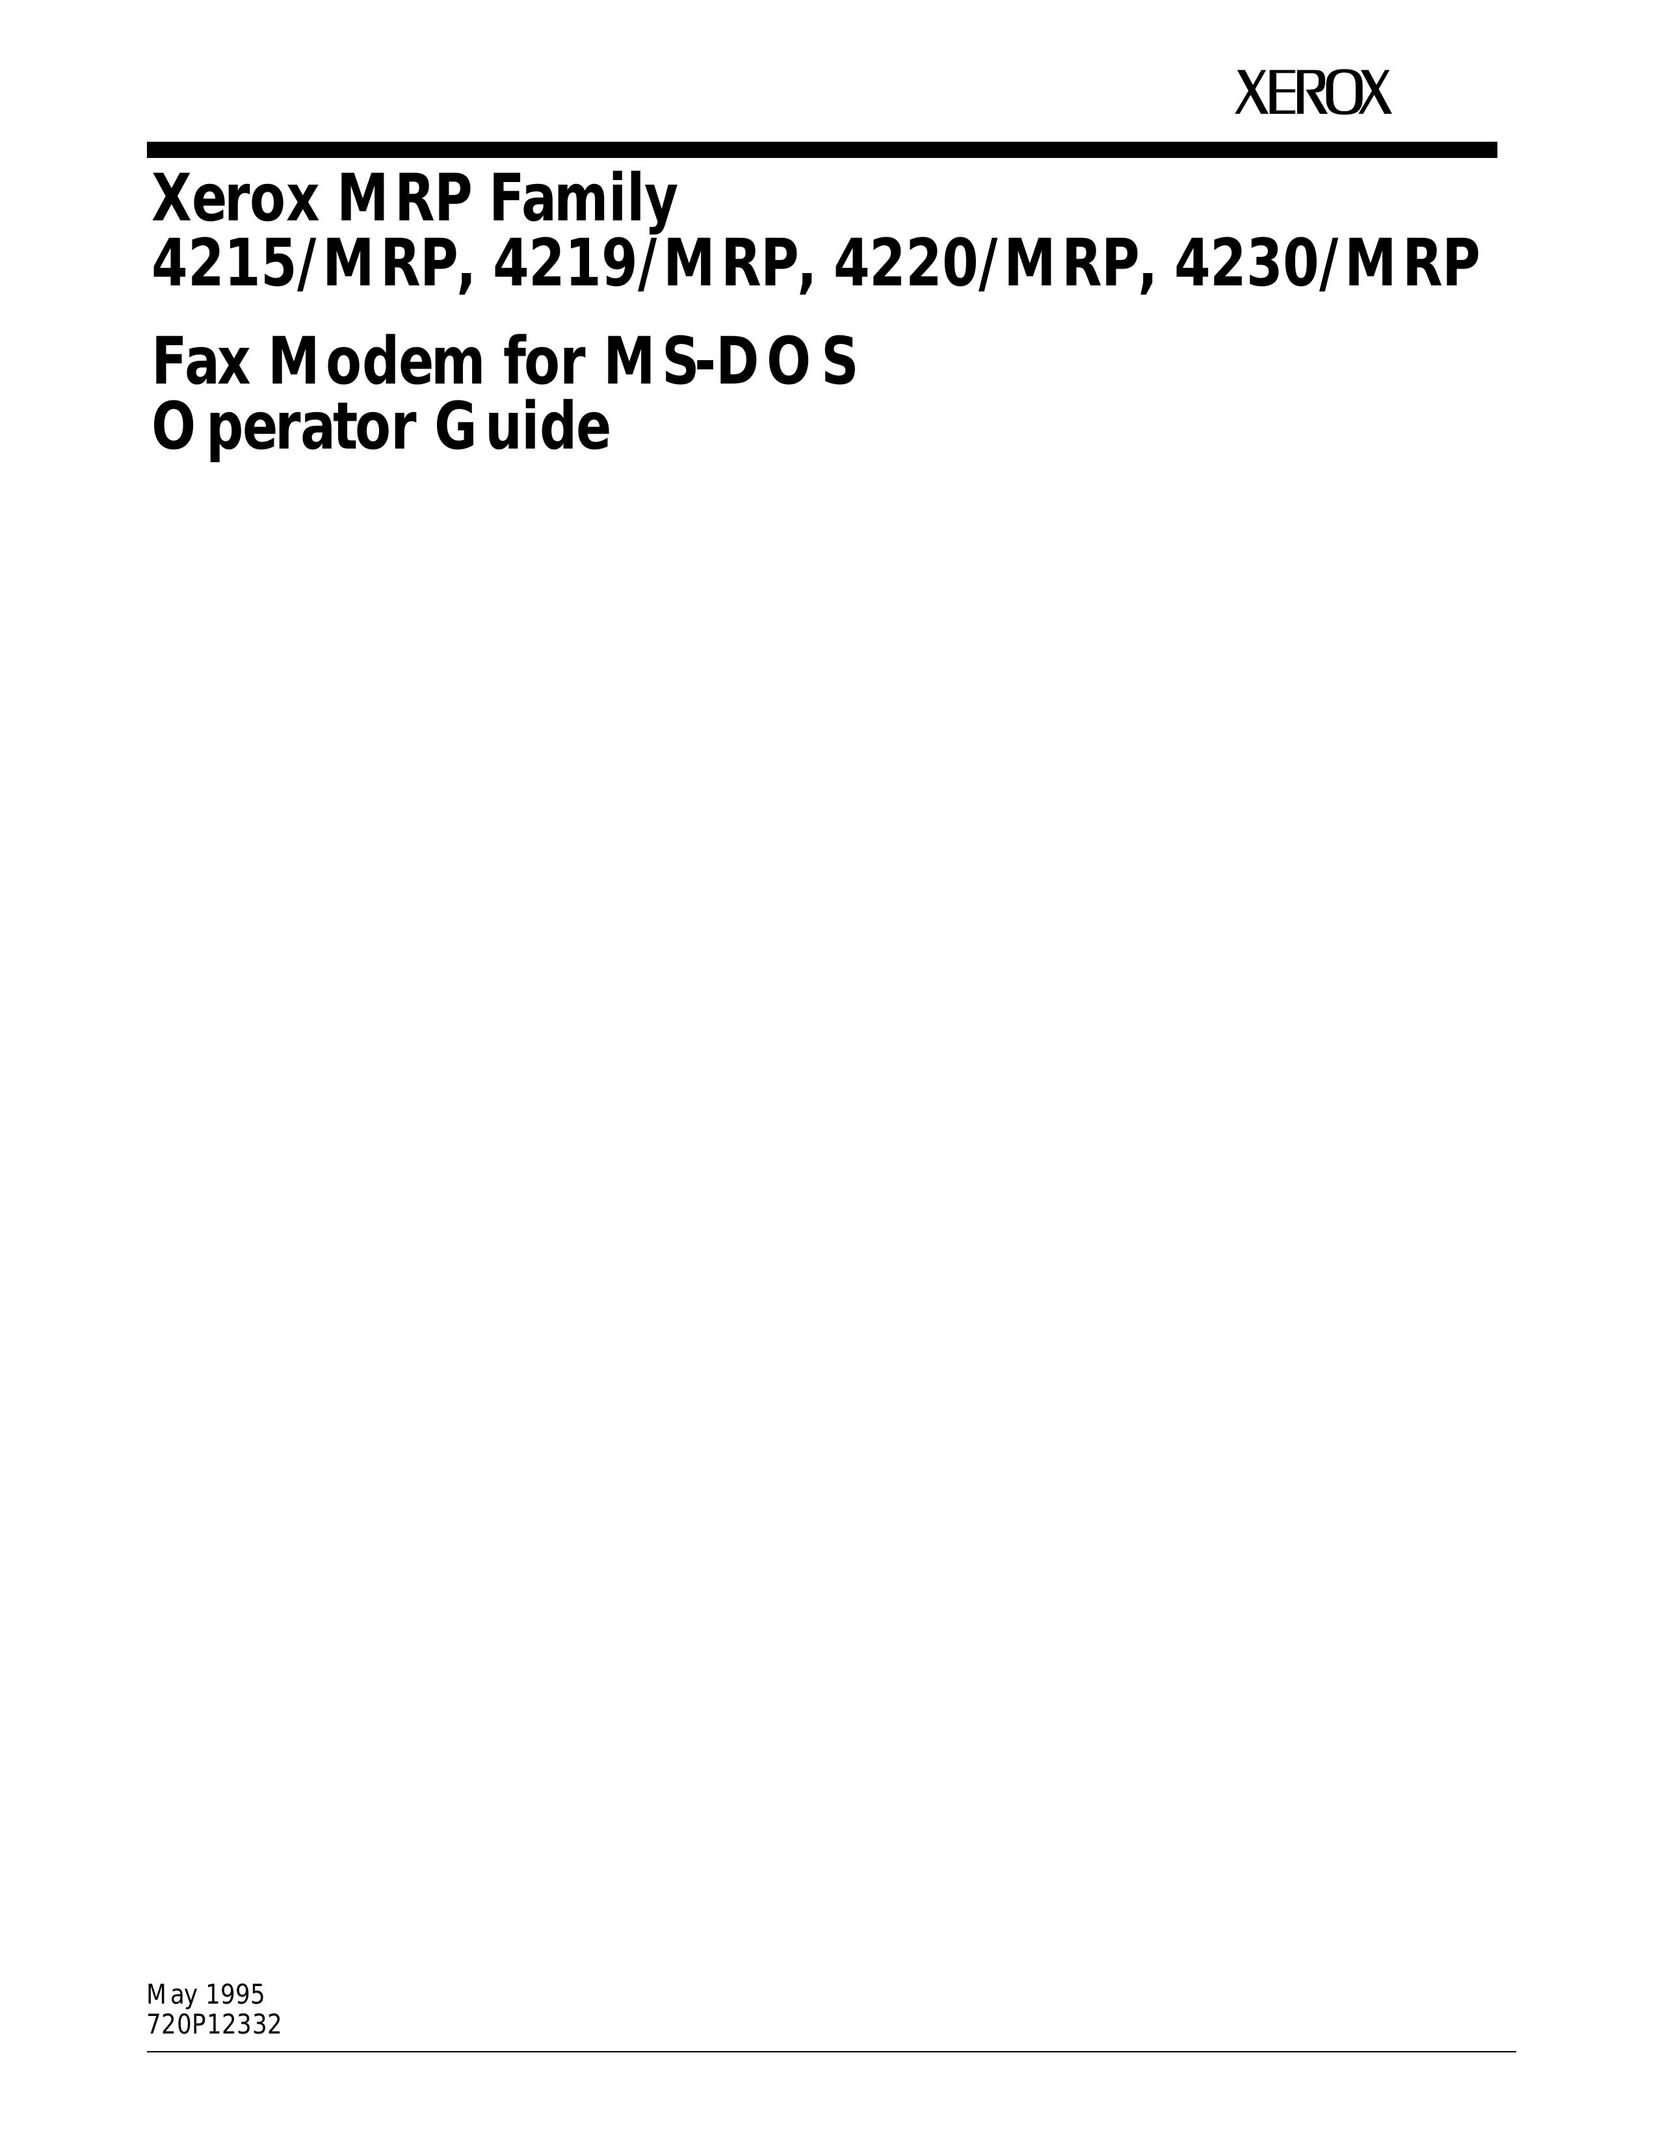 Xerox 4230/MRP Modem User Manual